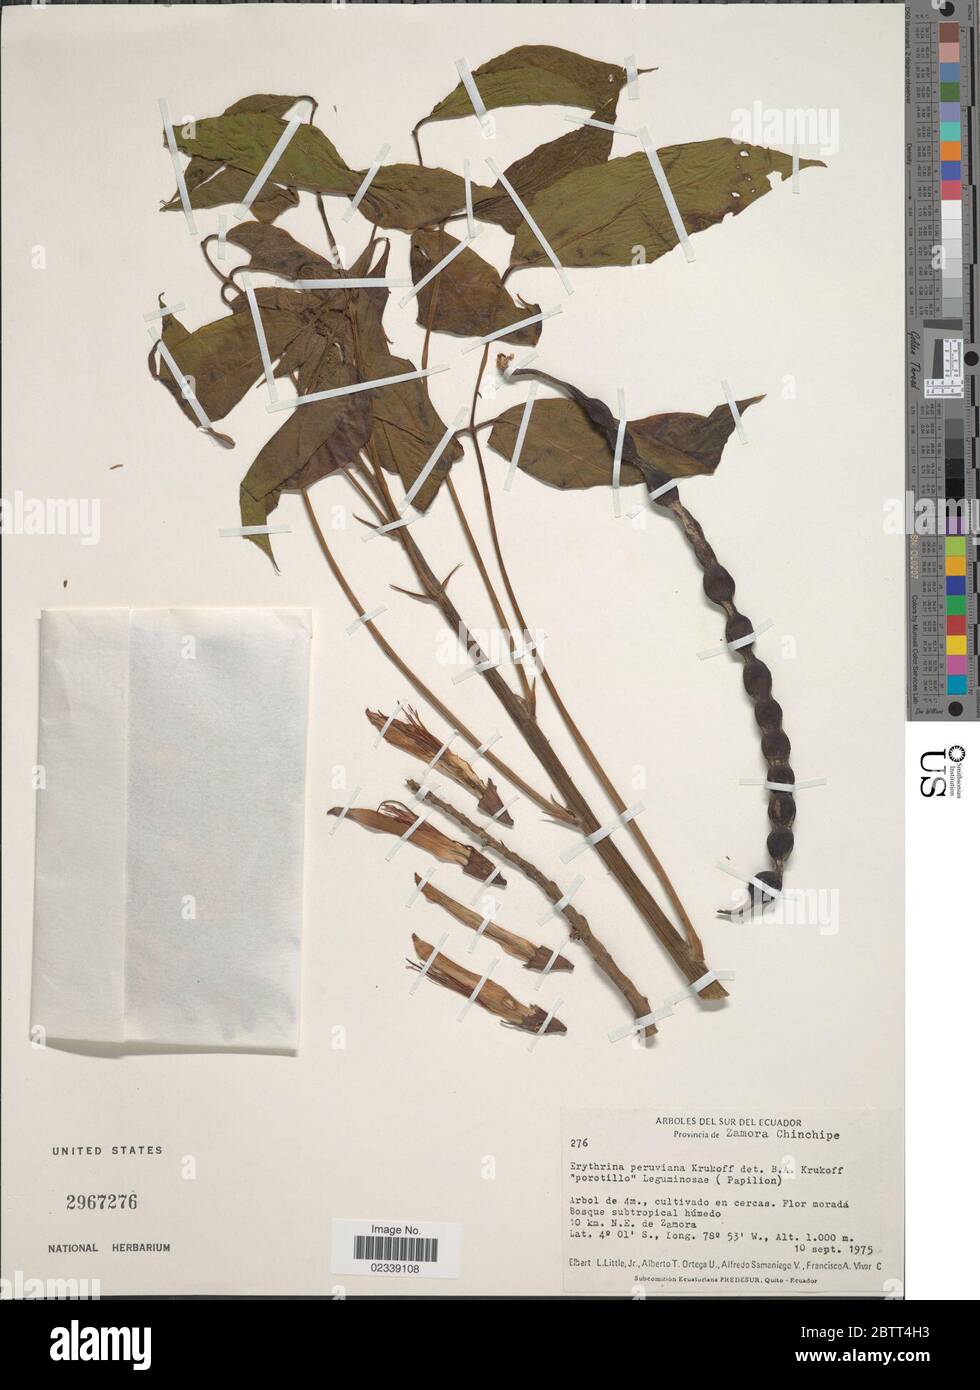 Erythrina peruviana Krukoff. Stock Photo